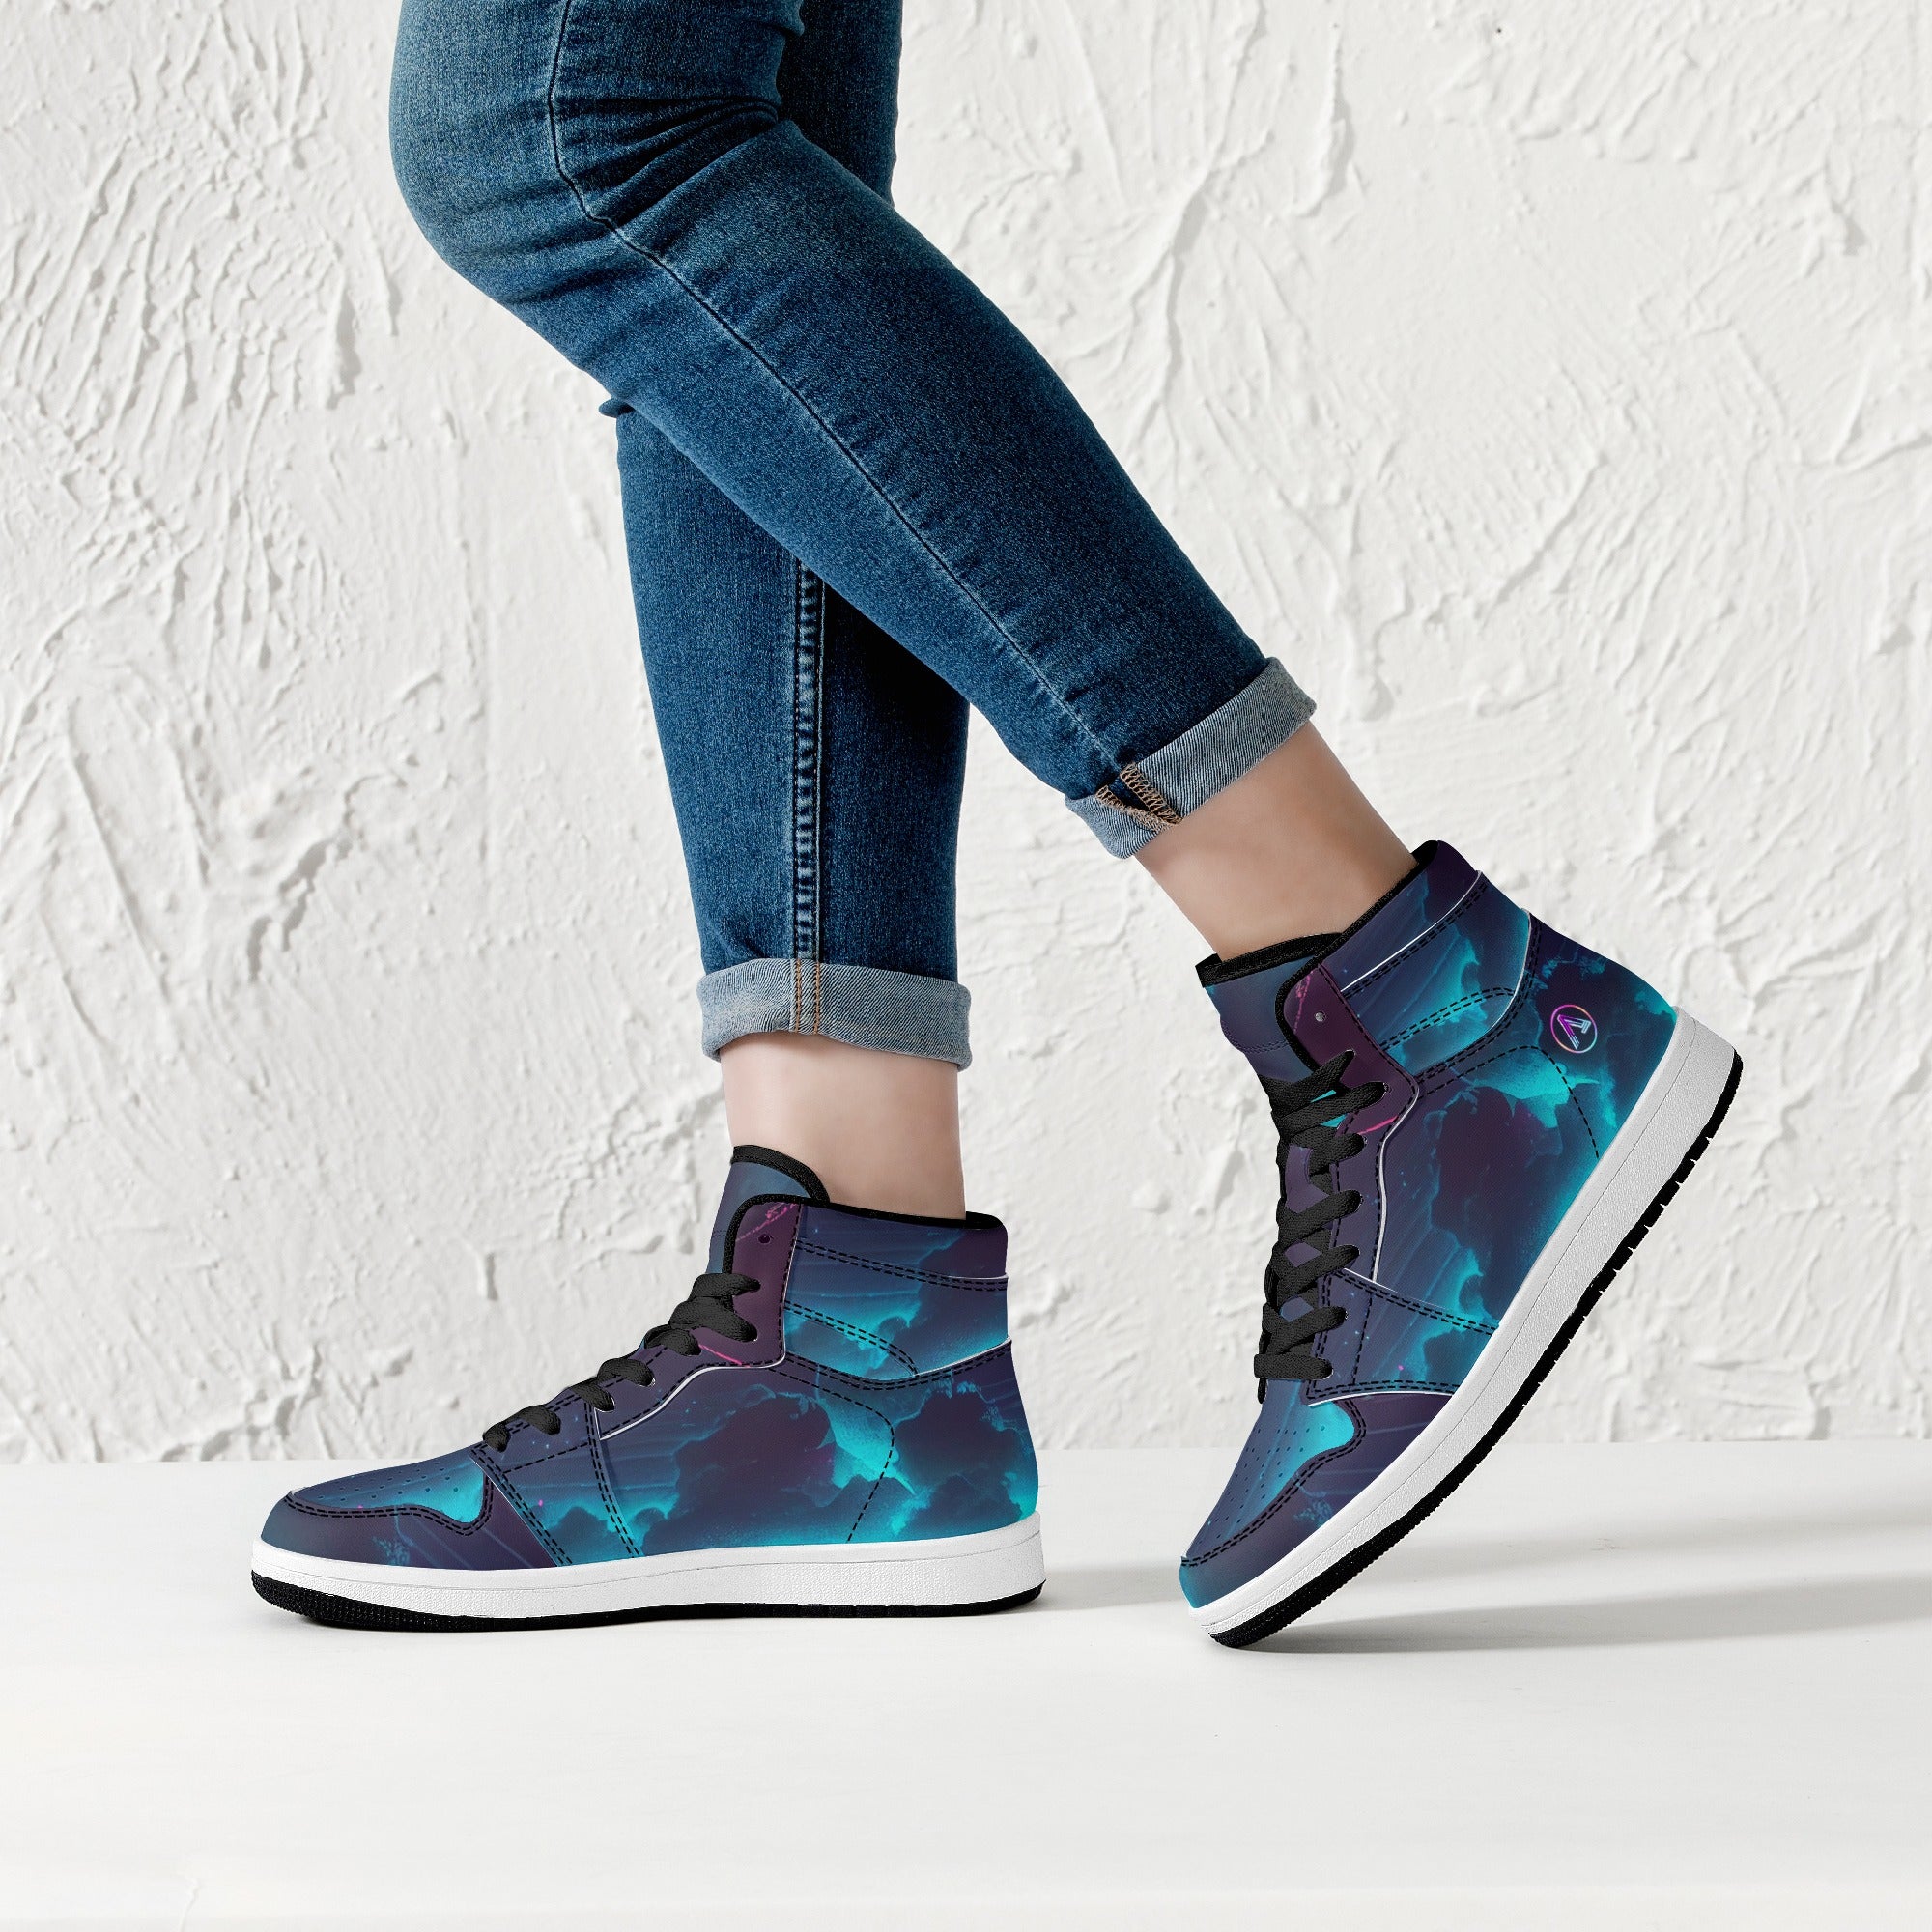 Women's Reminiscent Blue Hi-Top Sneakers